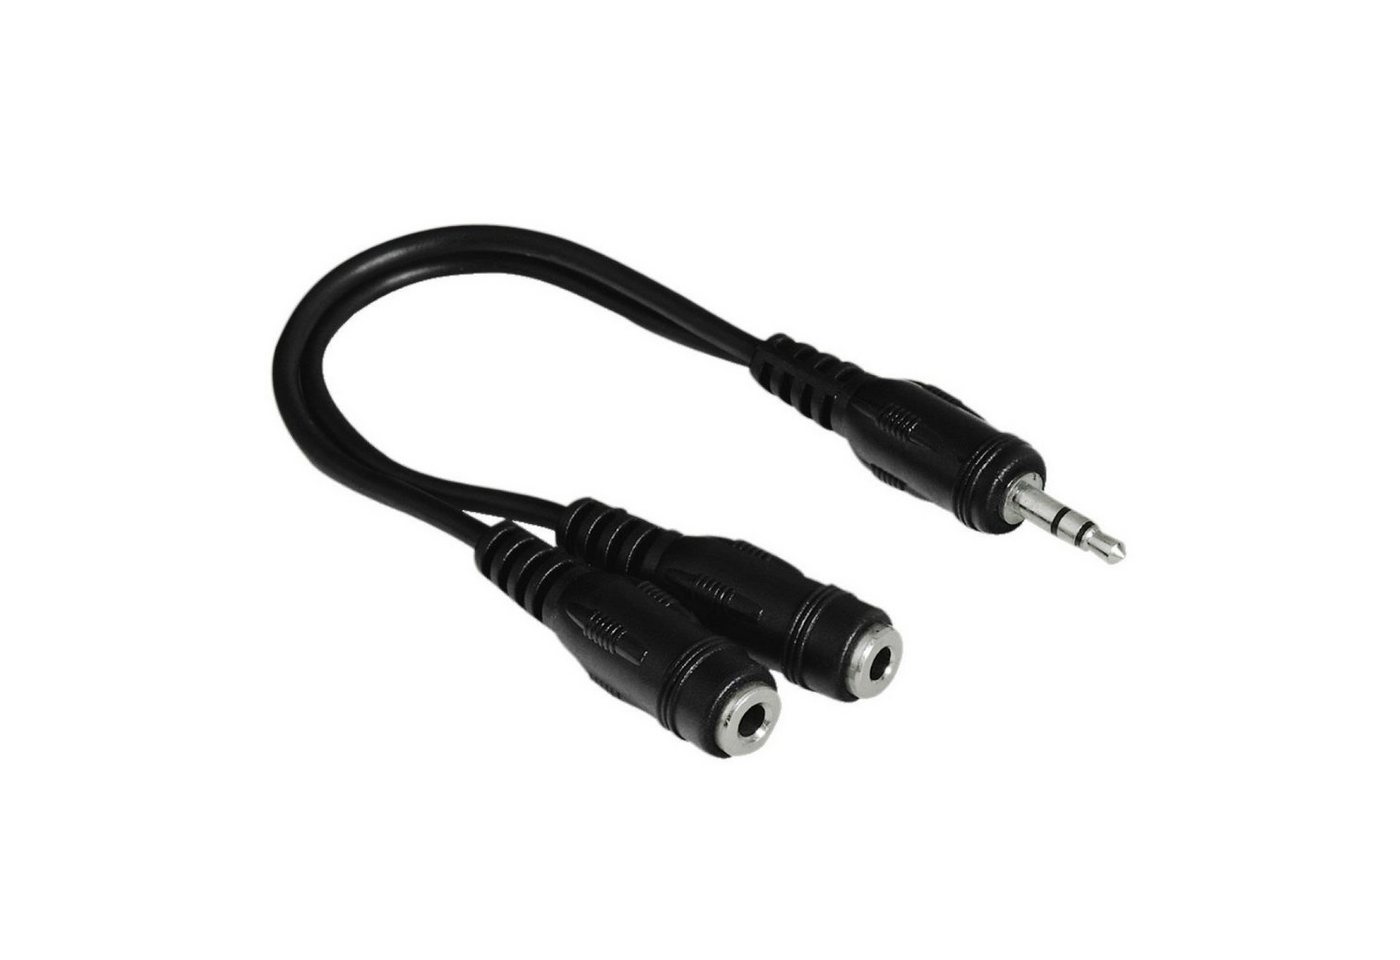 Hama Klinke-Adapter PC Y Splitter Audio-Kabel, 3,5-mm-Klinke, 3,5mm Klinke (20 cm), 3,5mm Klinke-Stecker zu 2x 3,5mm Klinken-Kupplung Adapter von Hama